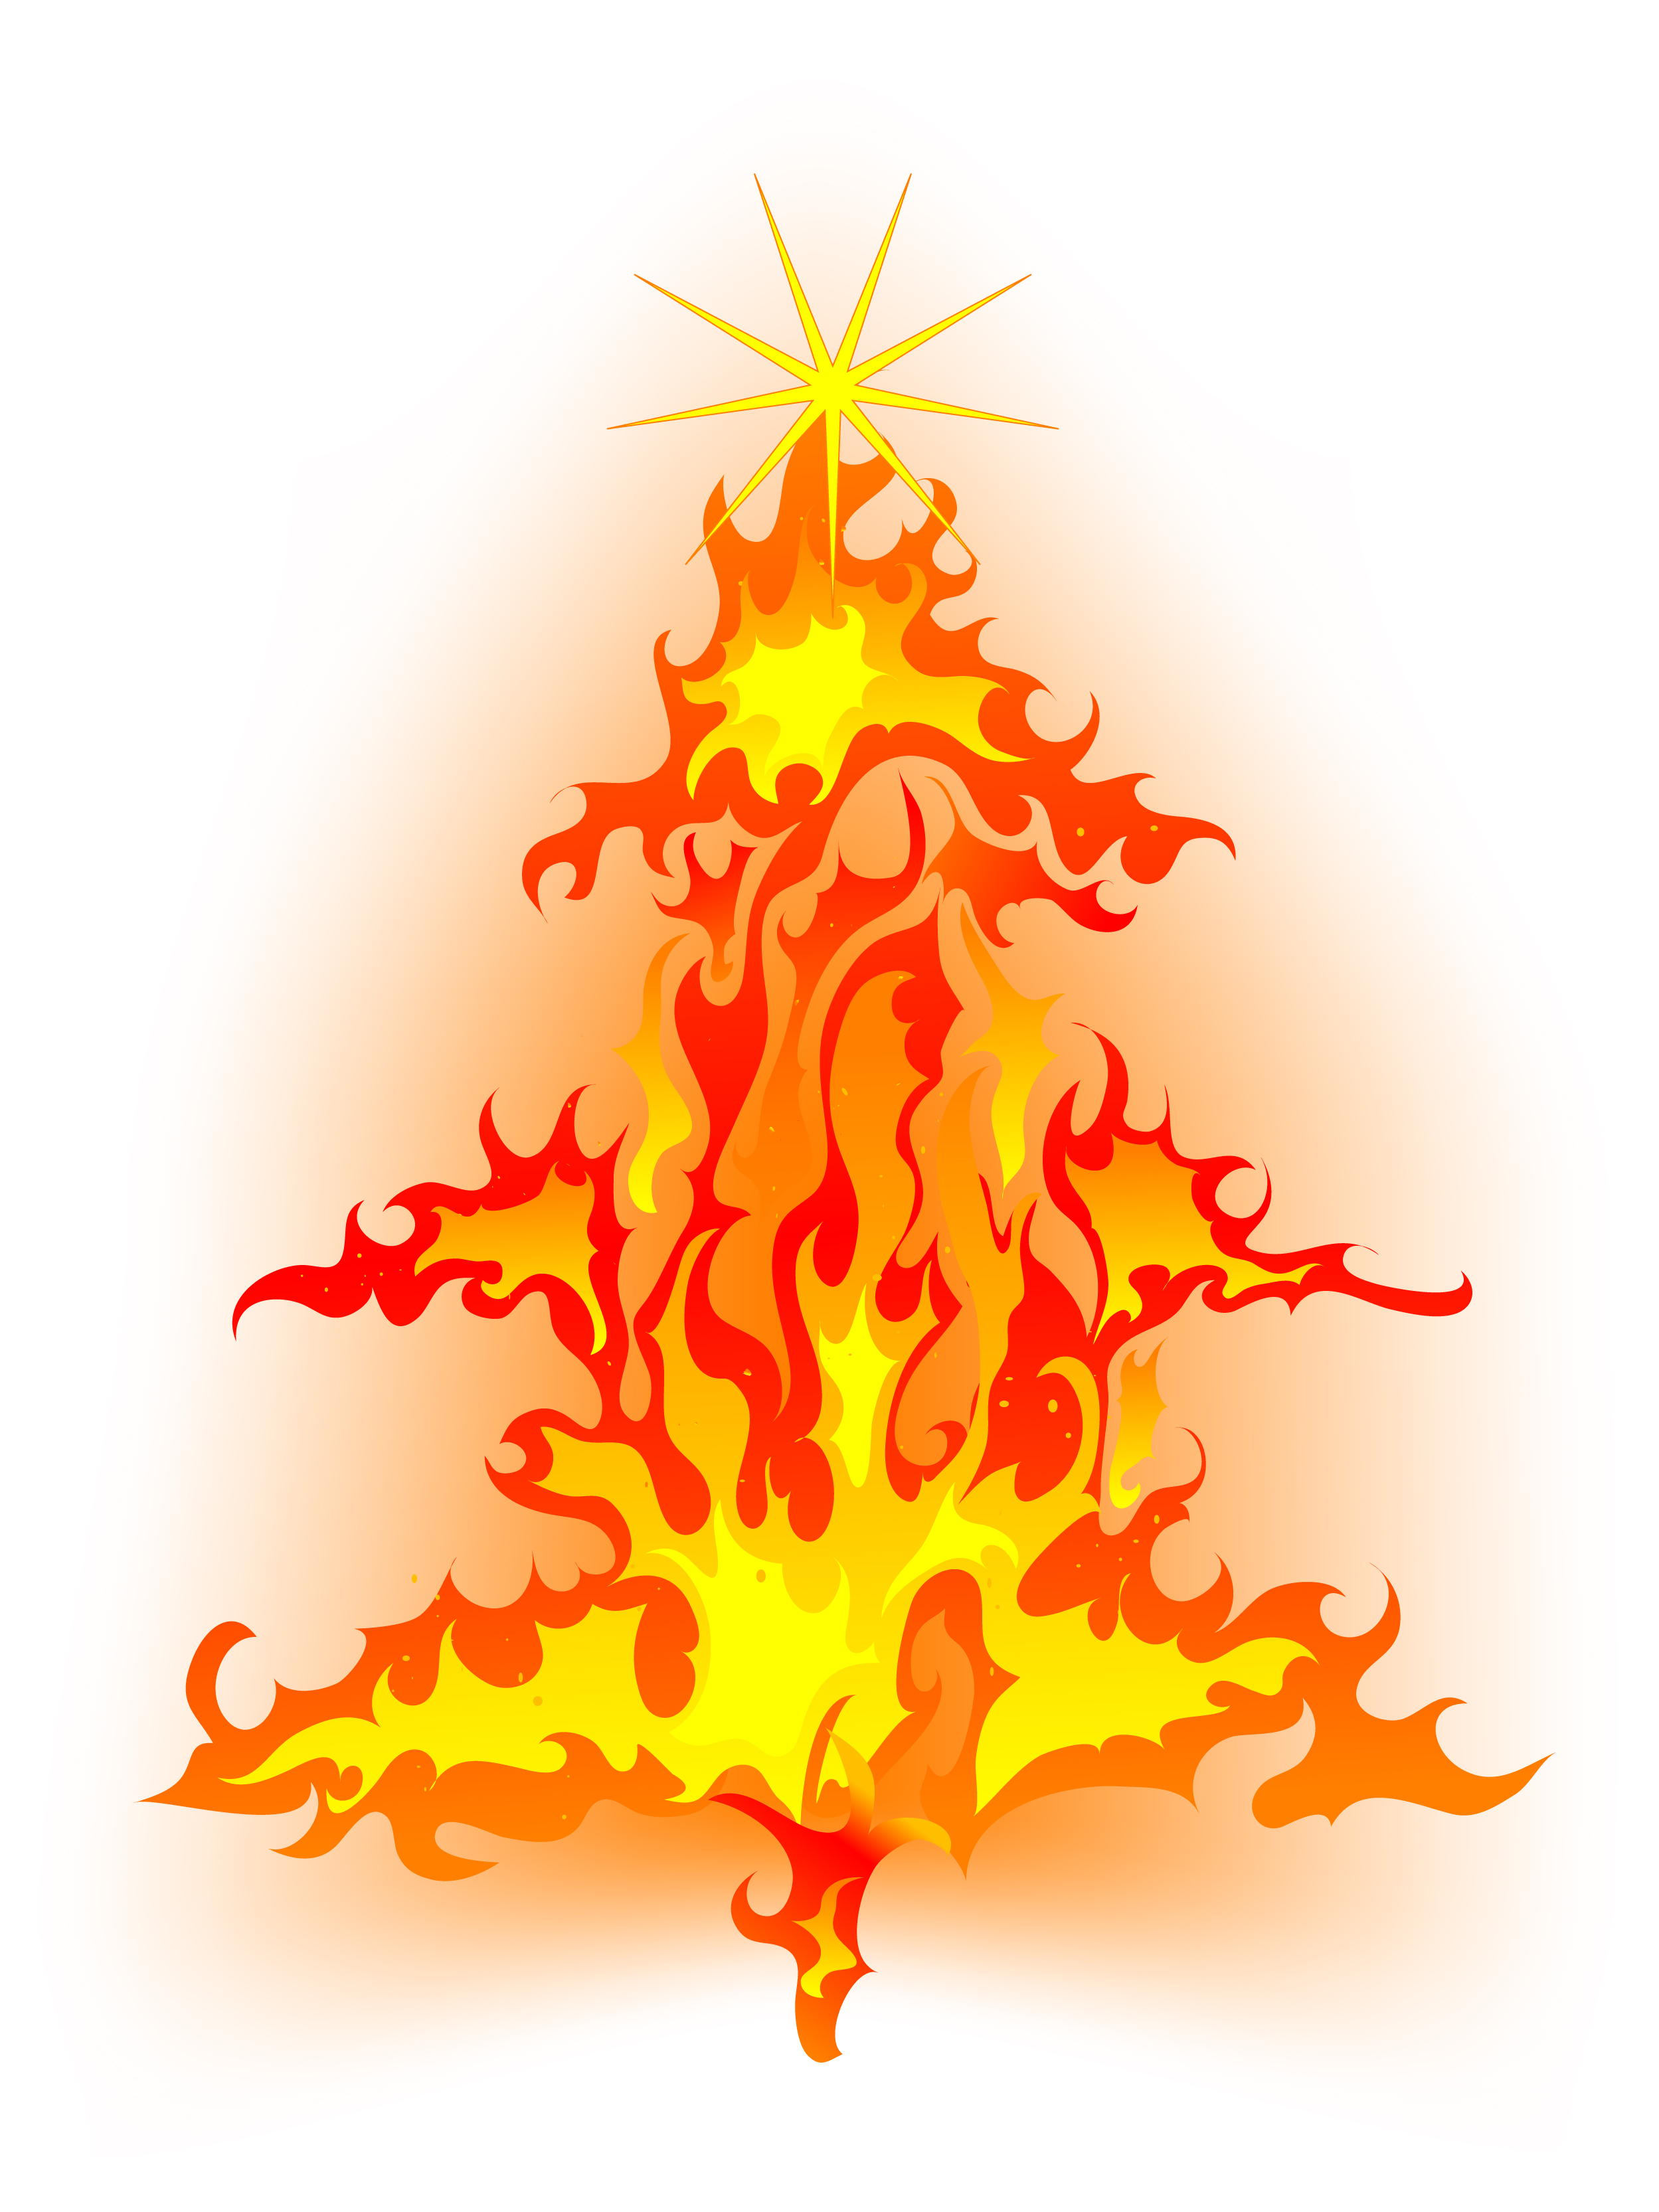 A Christmas tree burning